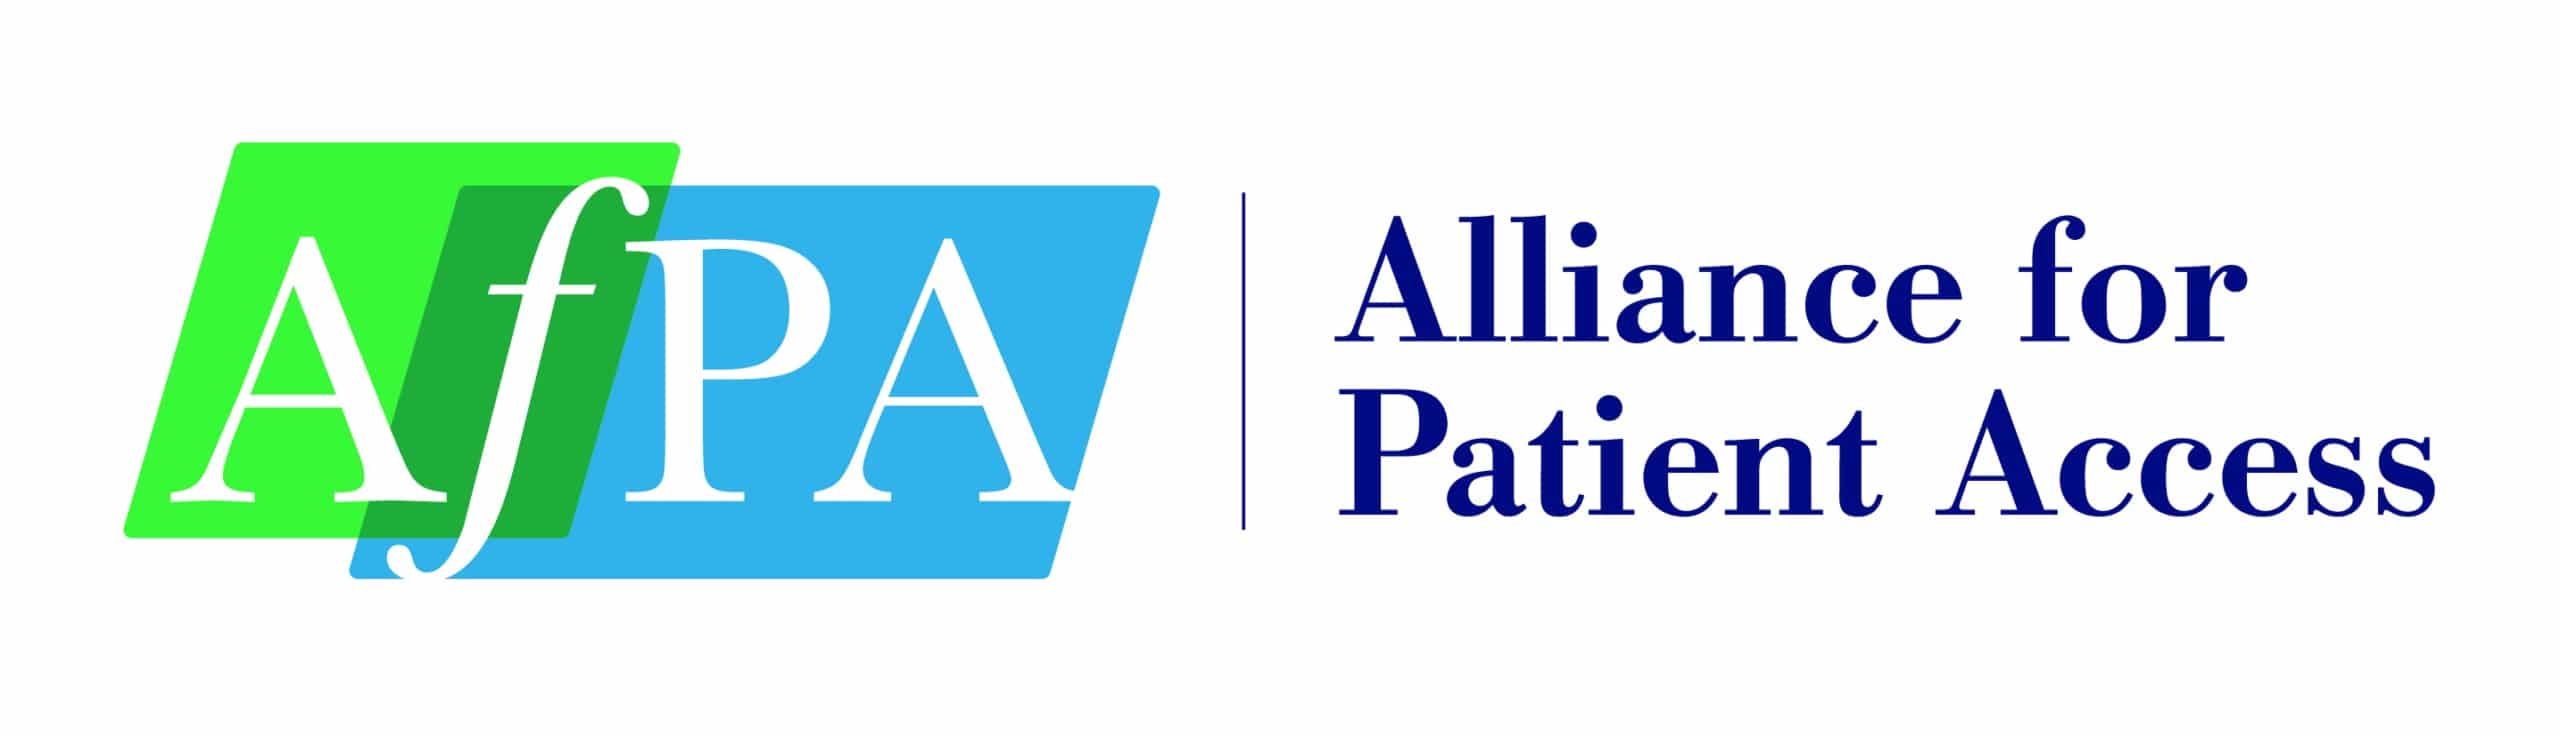 Alliance for Patient Access logo.